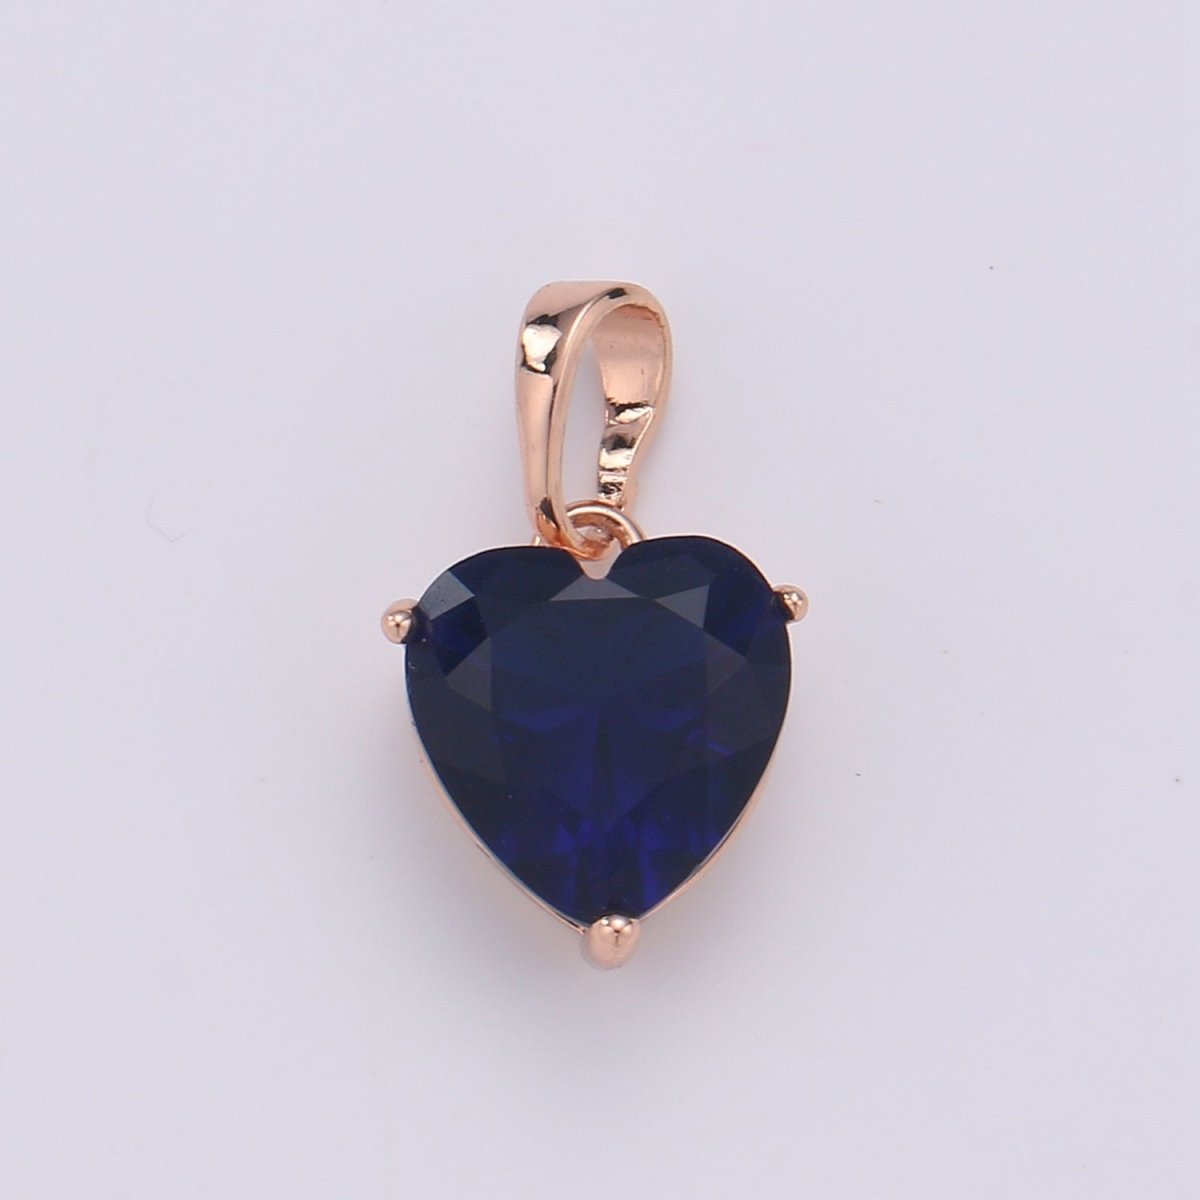 18k Gold Fill Charm Dark Blue Heart Cubic Zirconia Charm w/ Colored CZ Crystal Gem Stone GemStone Pendant Valentine Jewelry Supply J-201 - DLUXCA